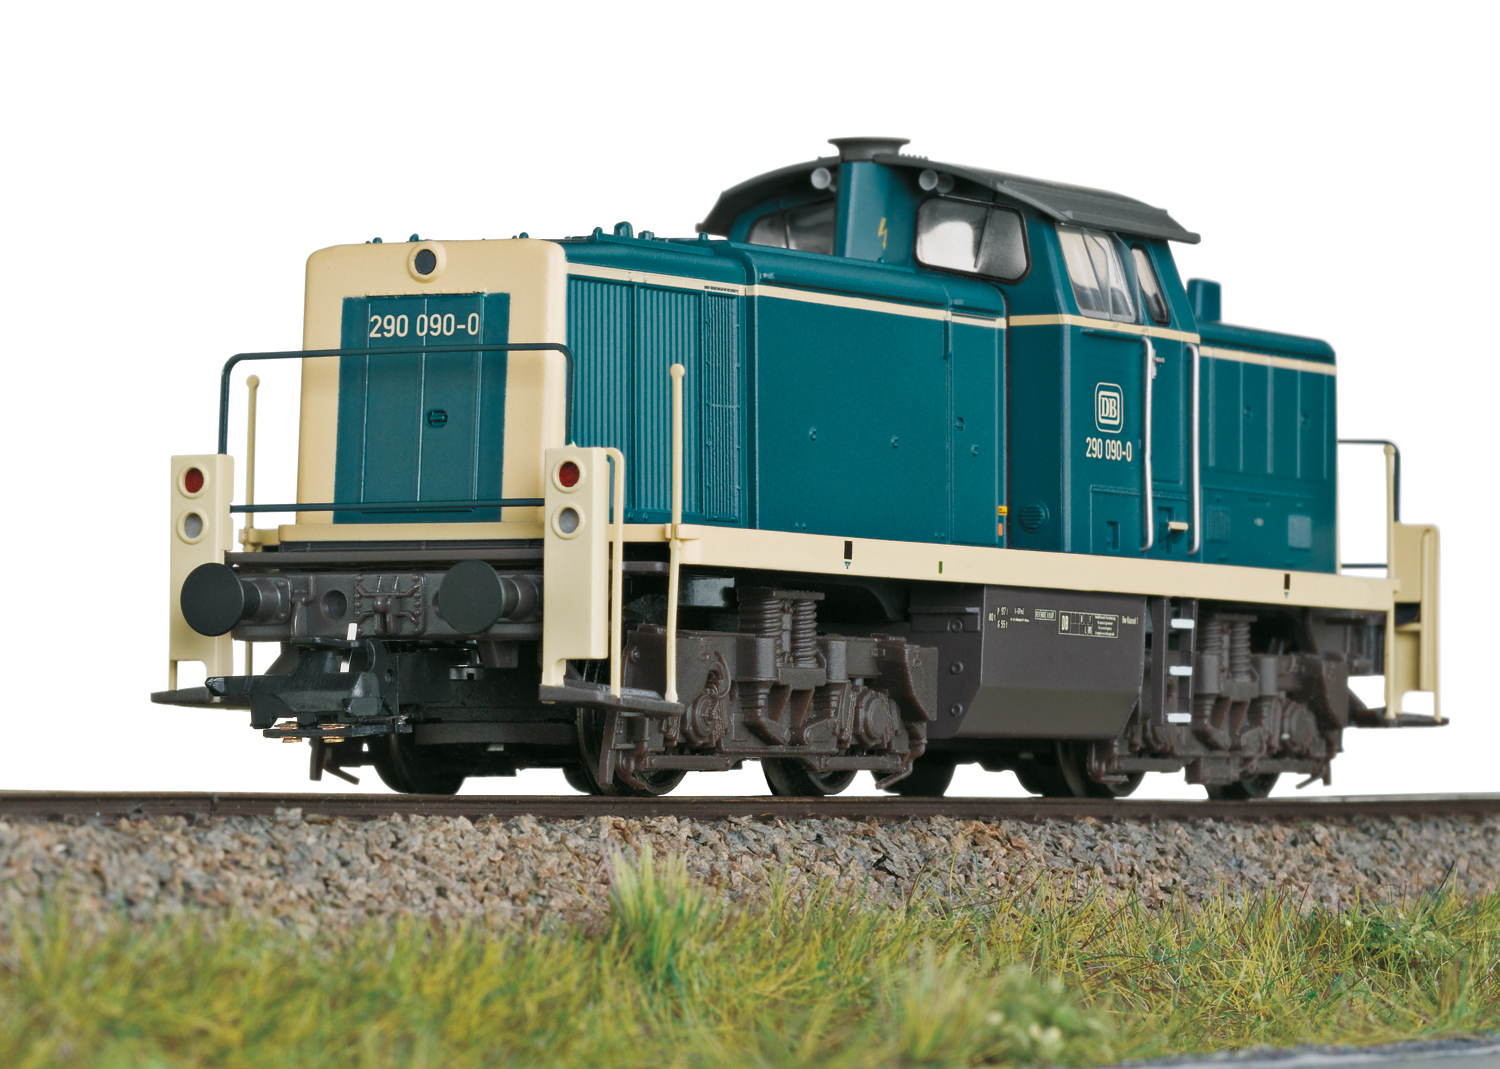 Diesellok BR 290 DB